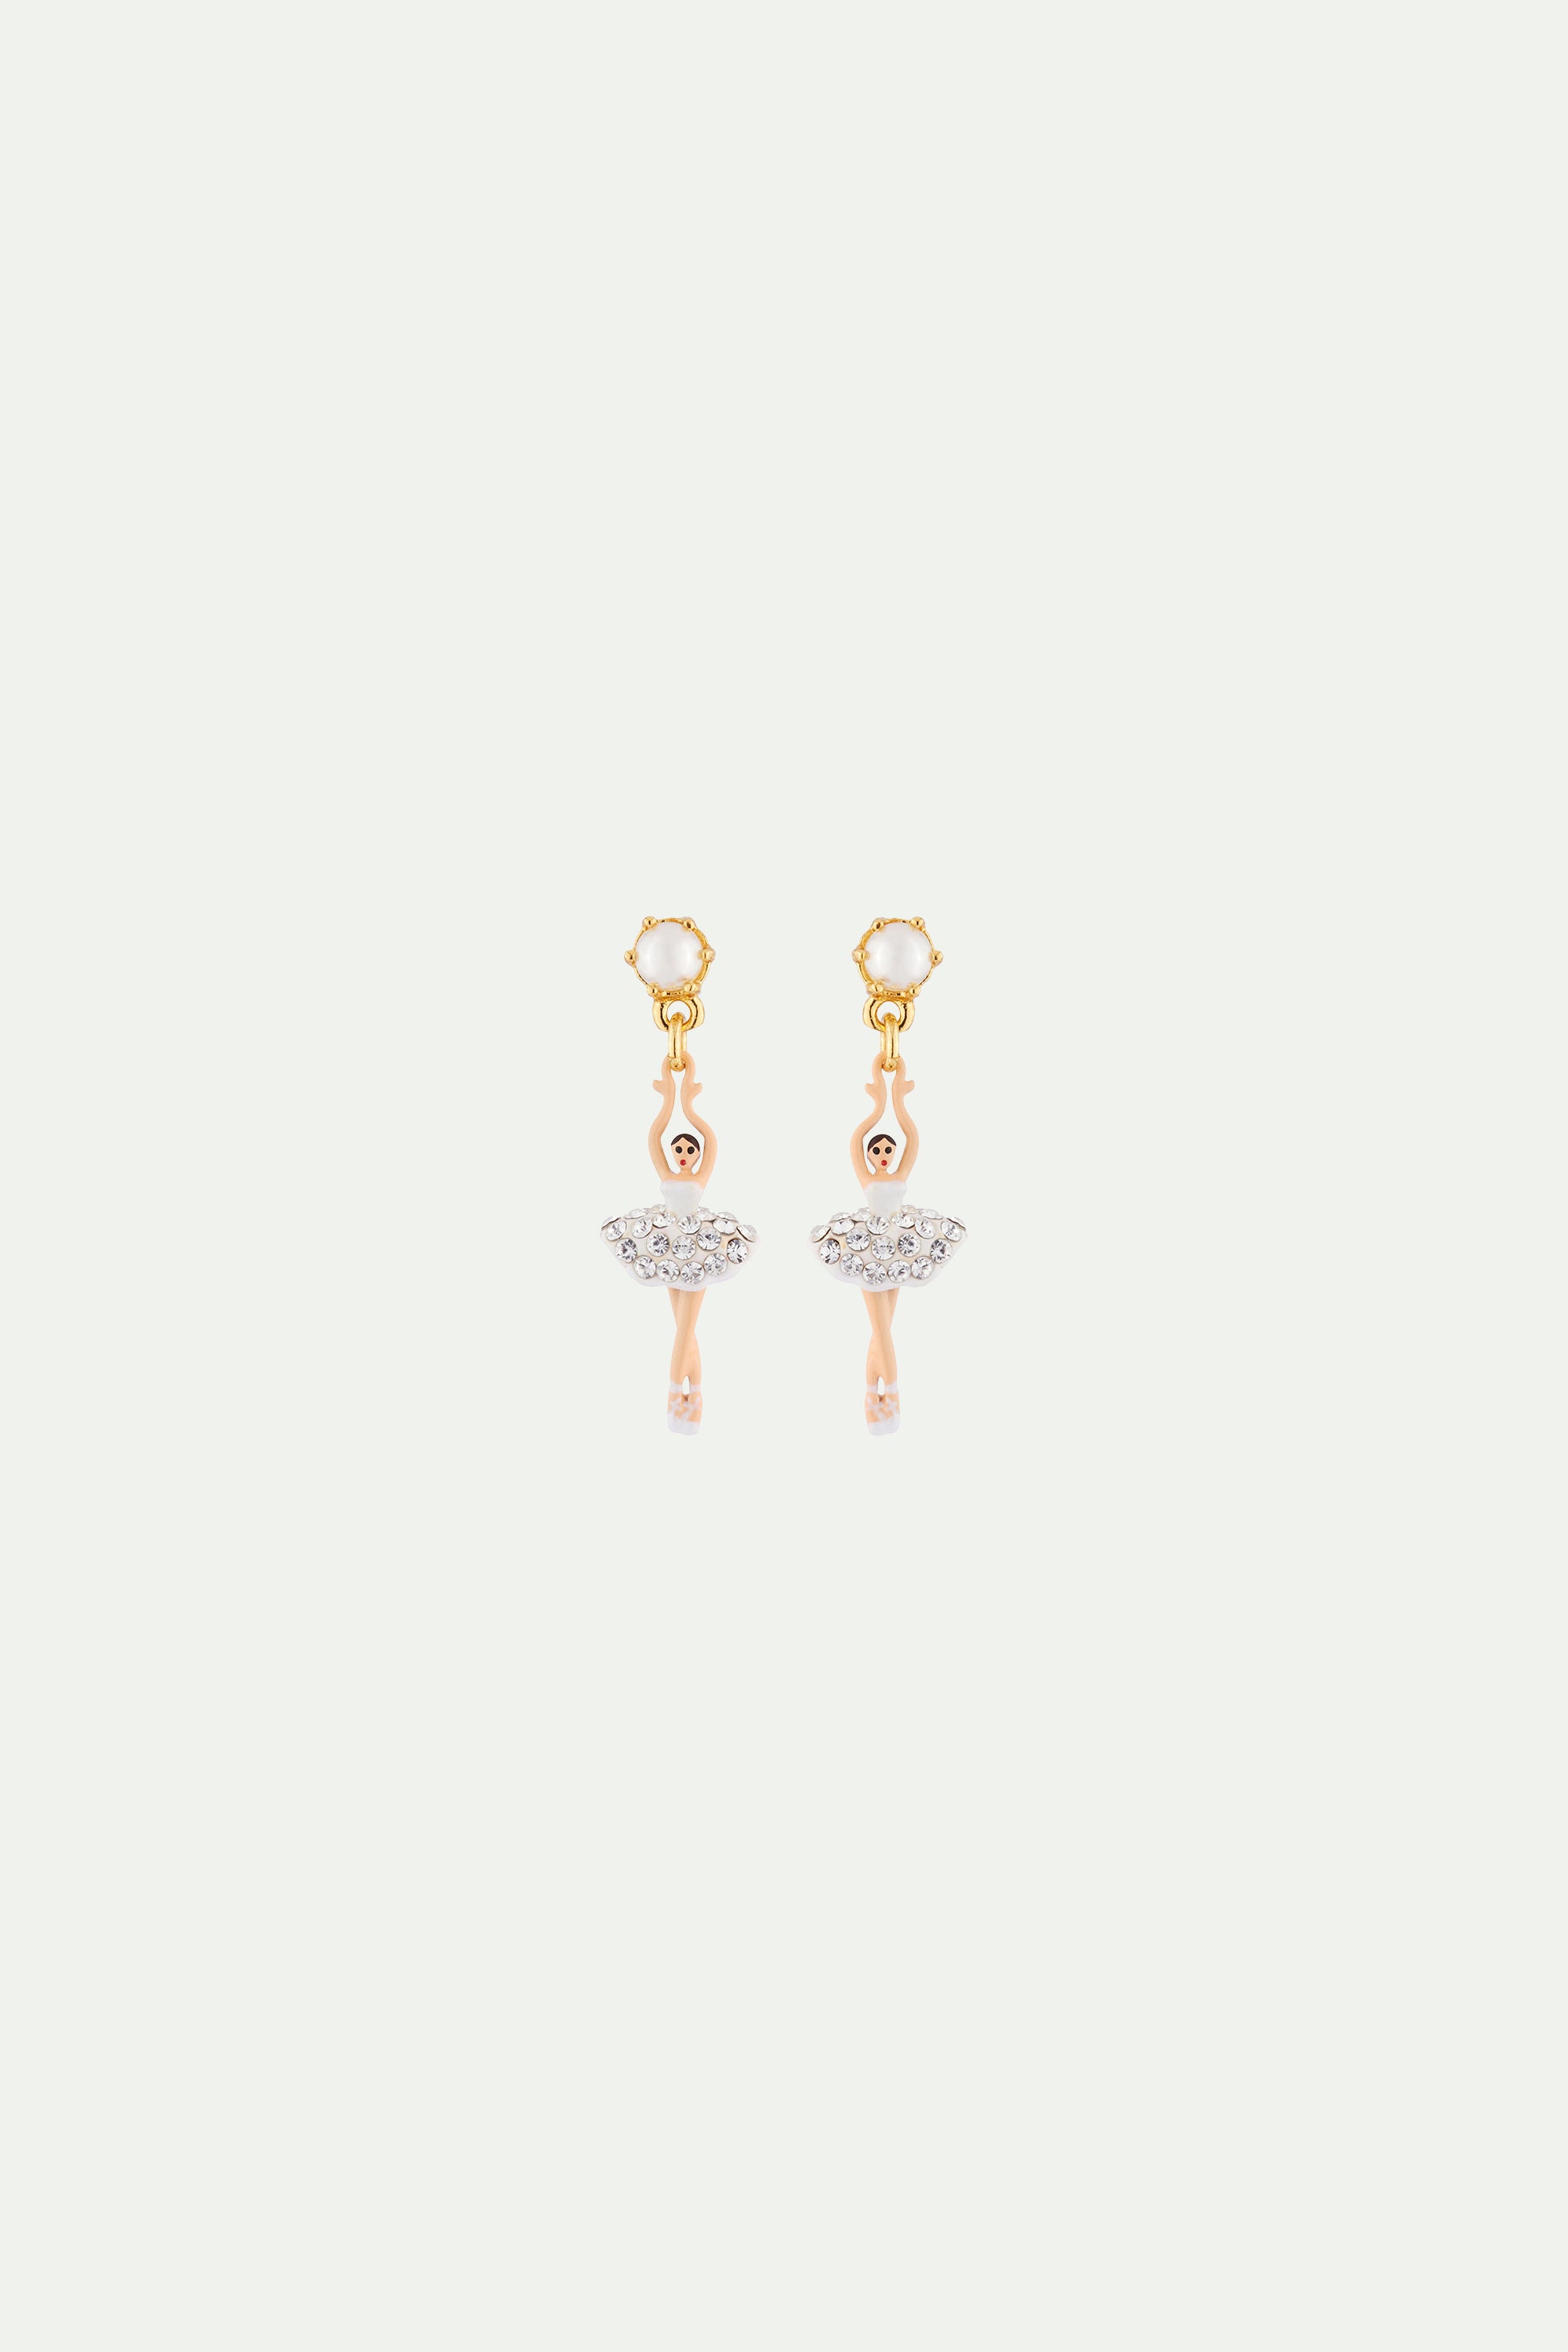 Boucles d'oreilles mini ballerine blanche strass et perles